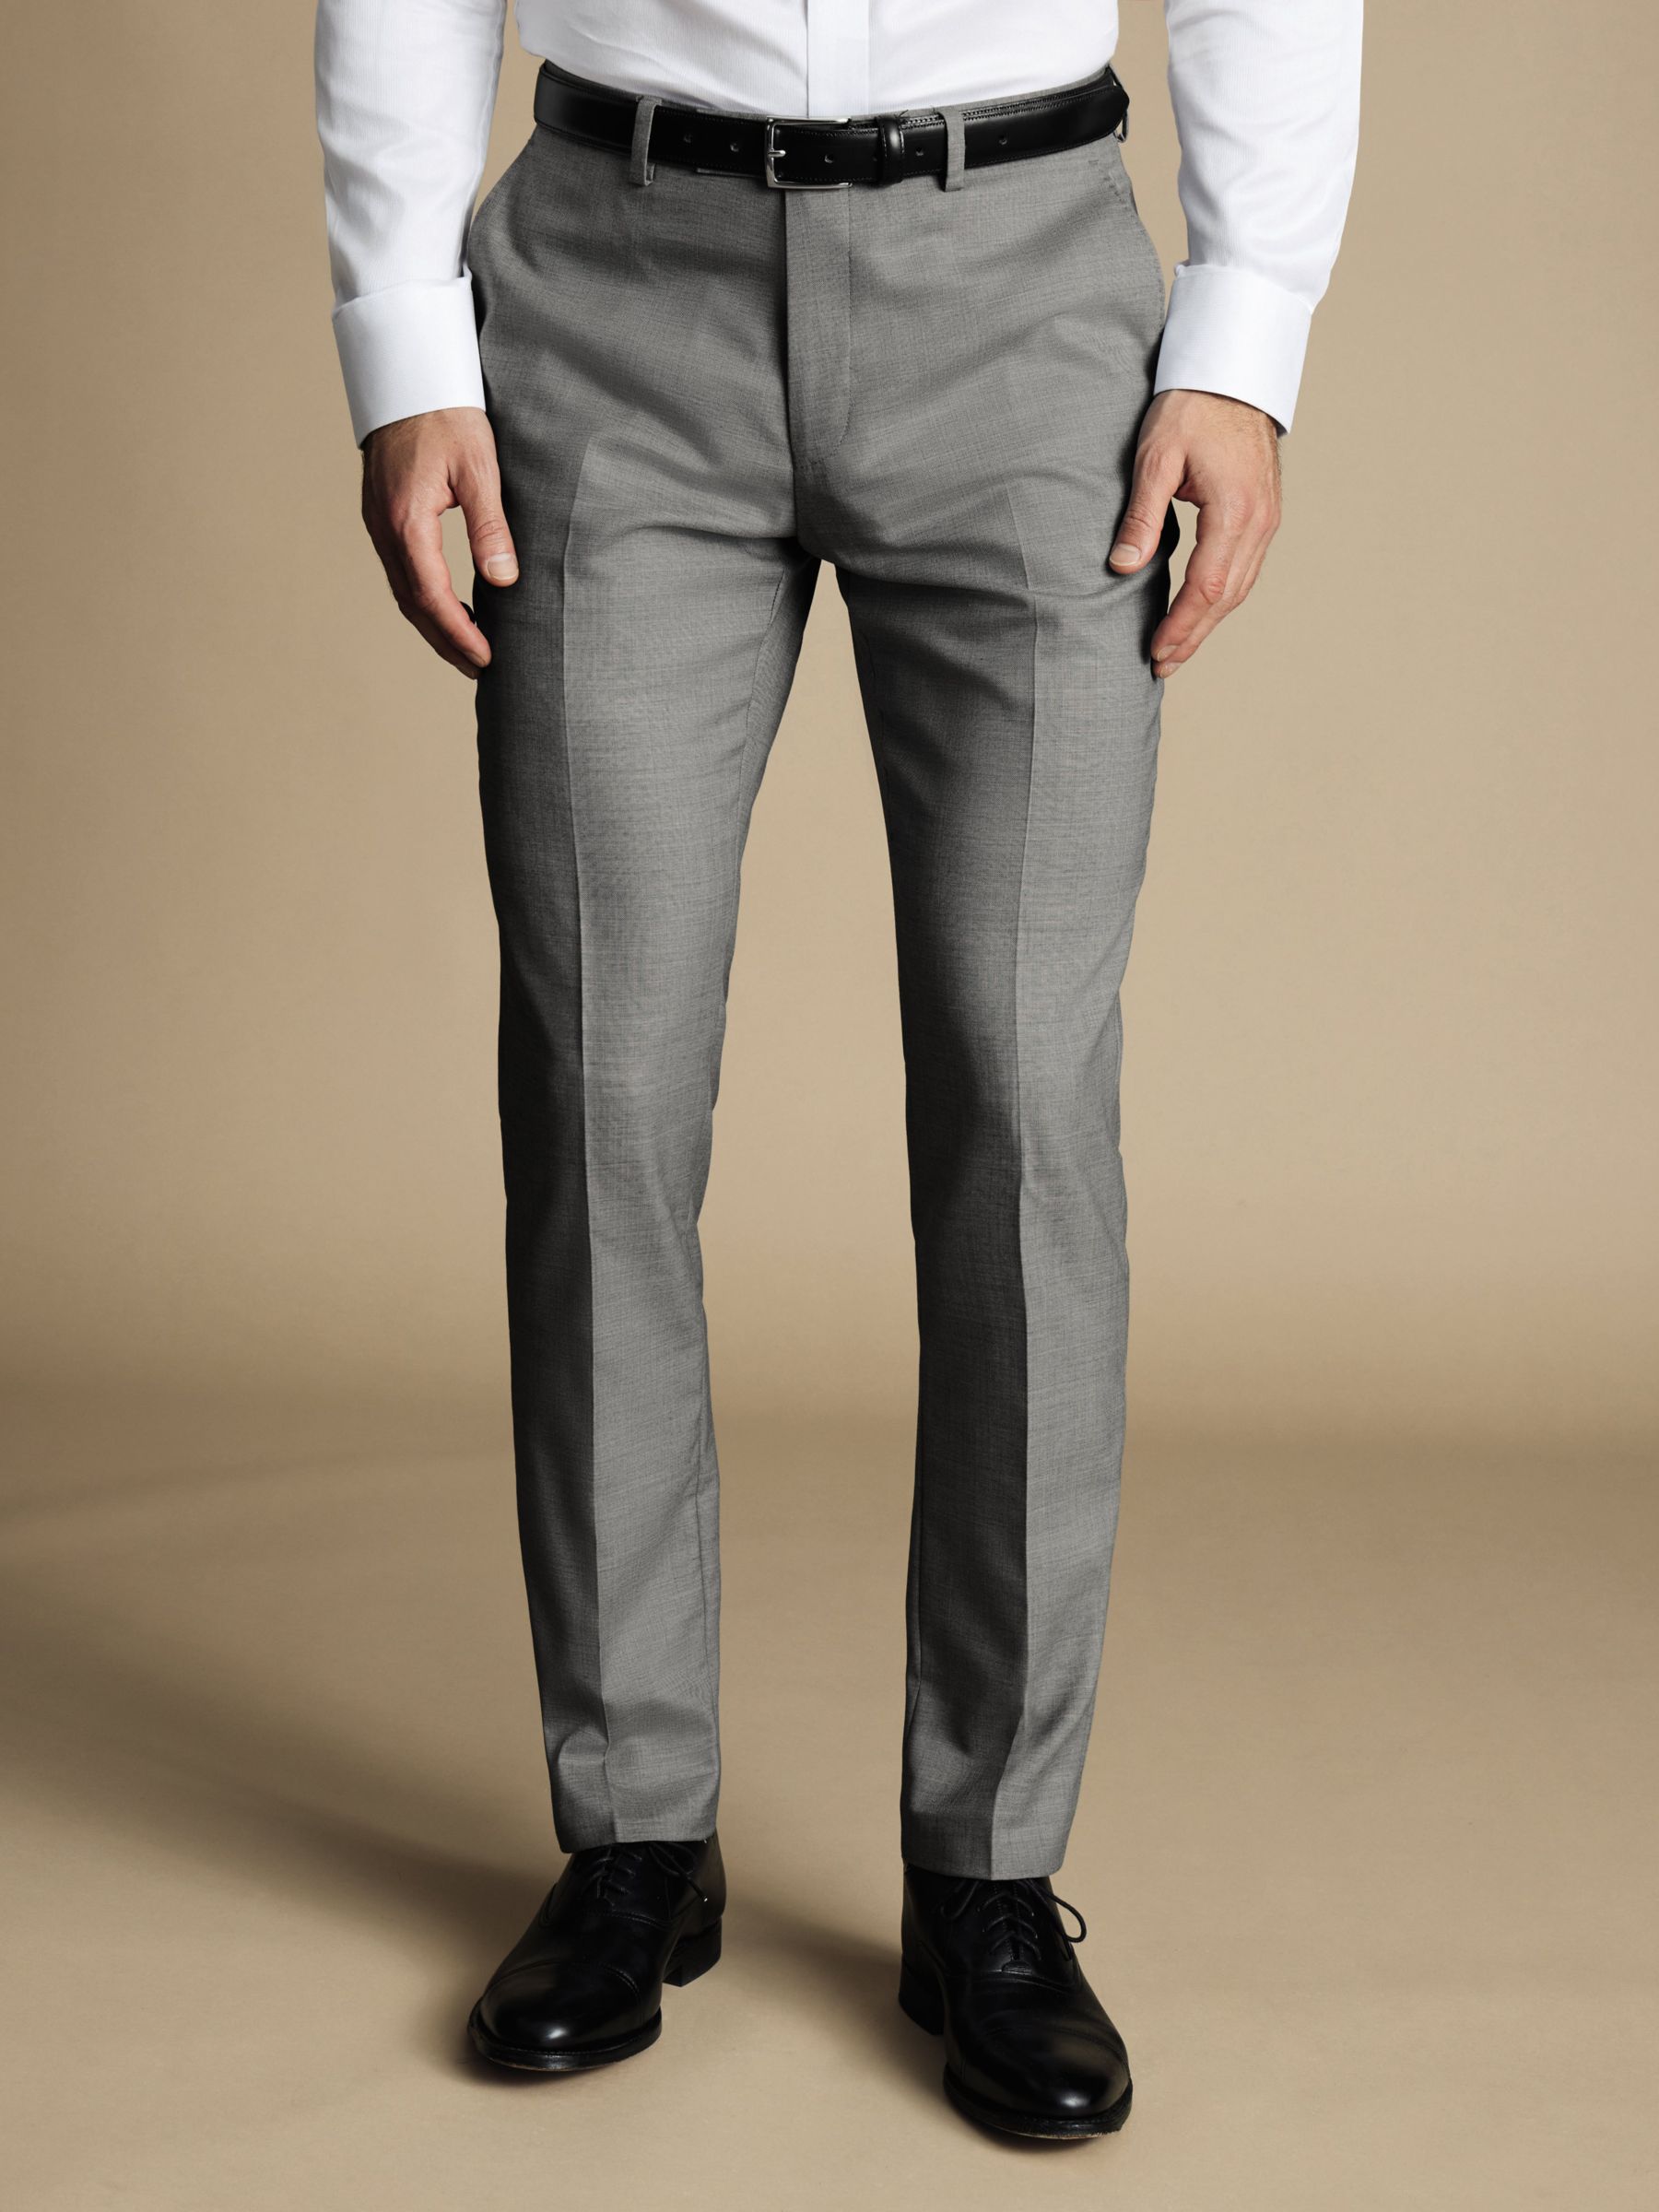 Charles Tyrwhitt Sharkskin Ultimate Performance Slim Fit Suit Trousers, Grey, W34/L30